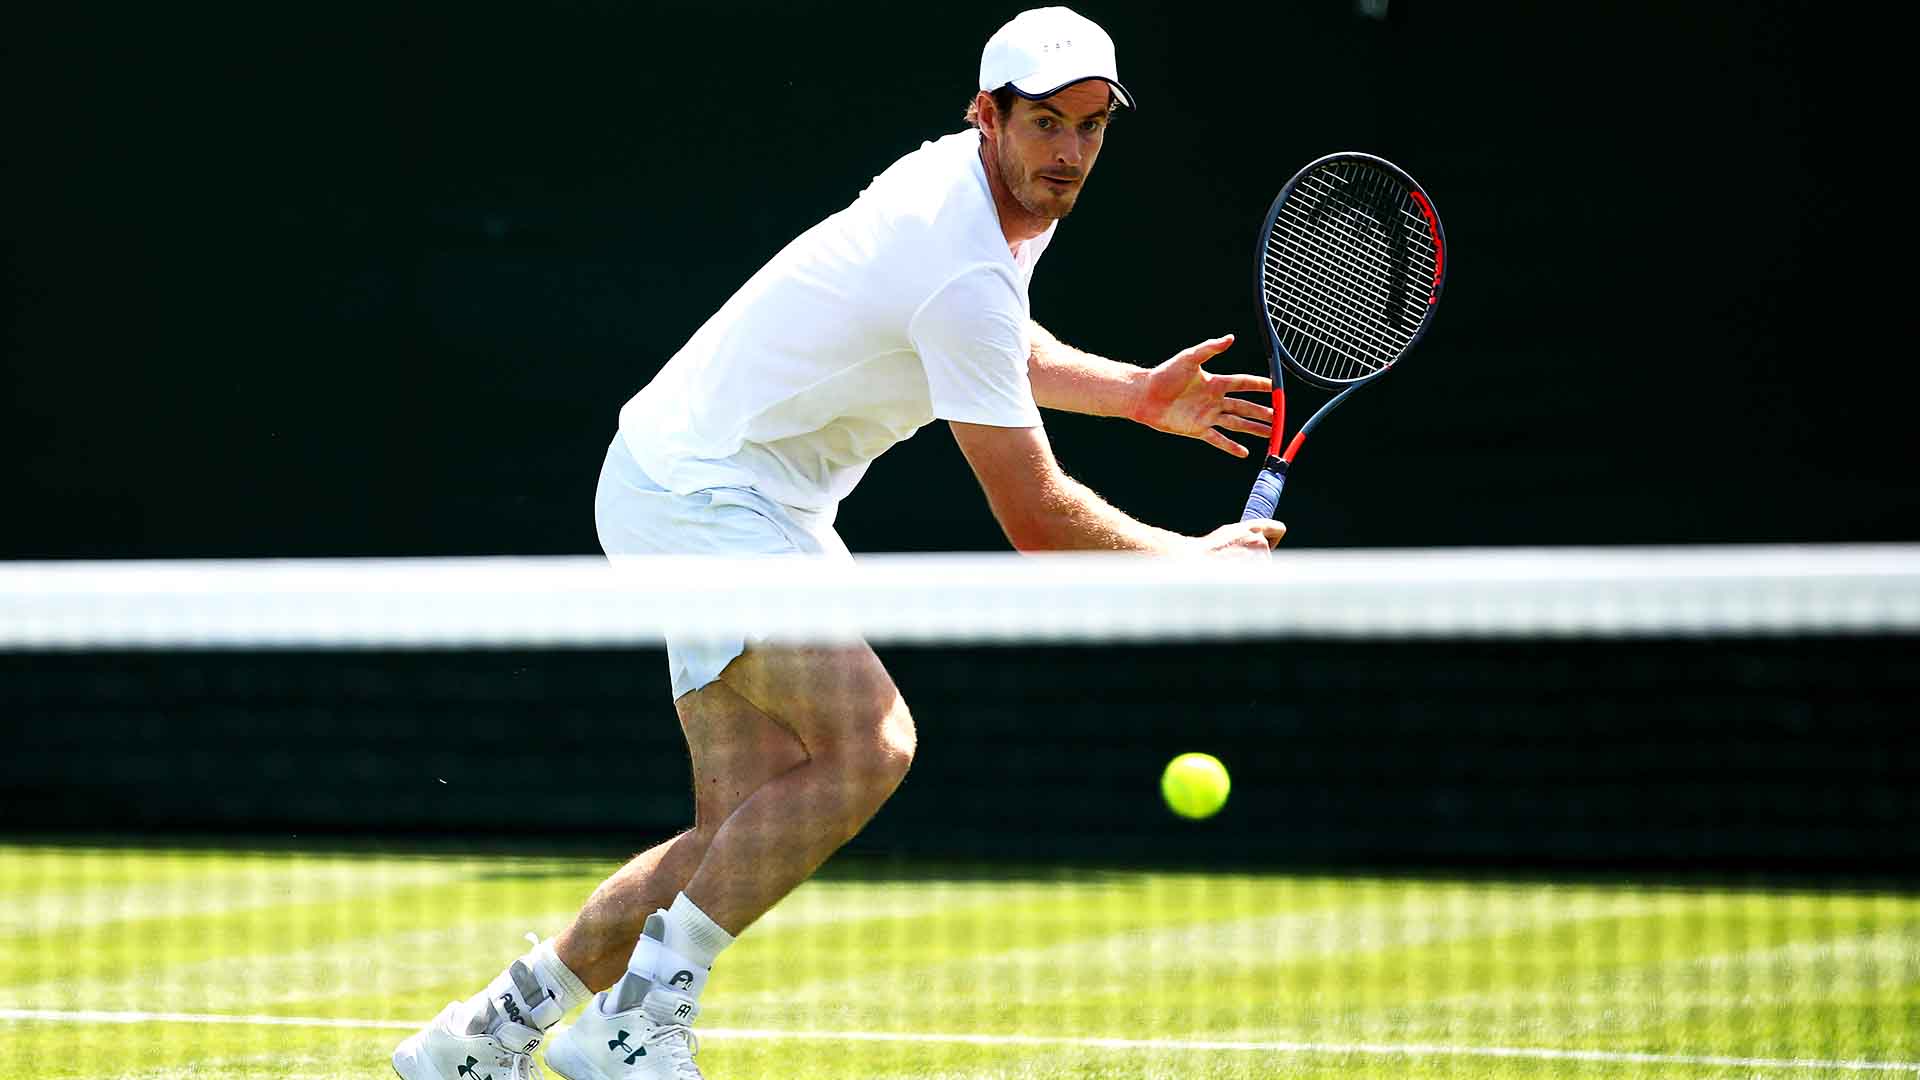 Wimbledon 2019 Andy Murray return